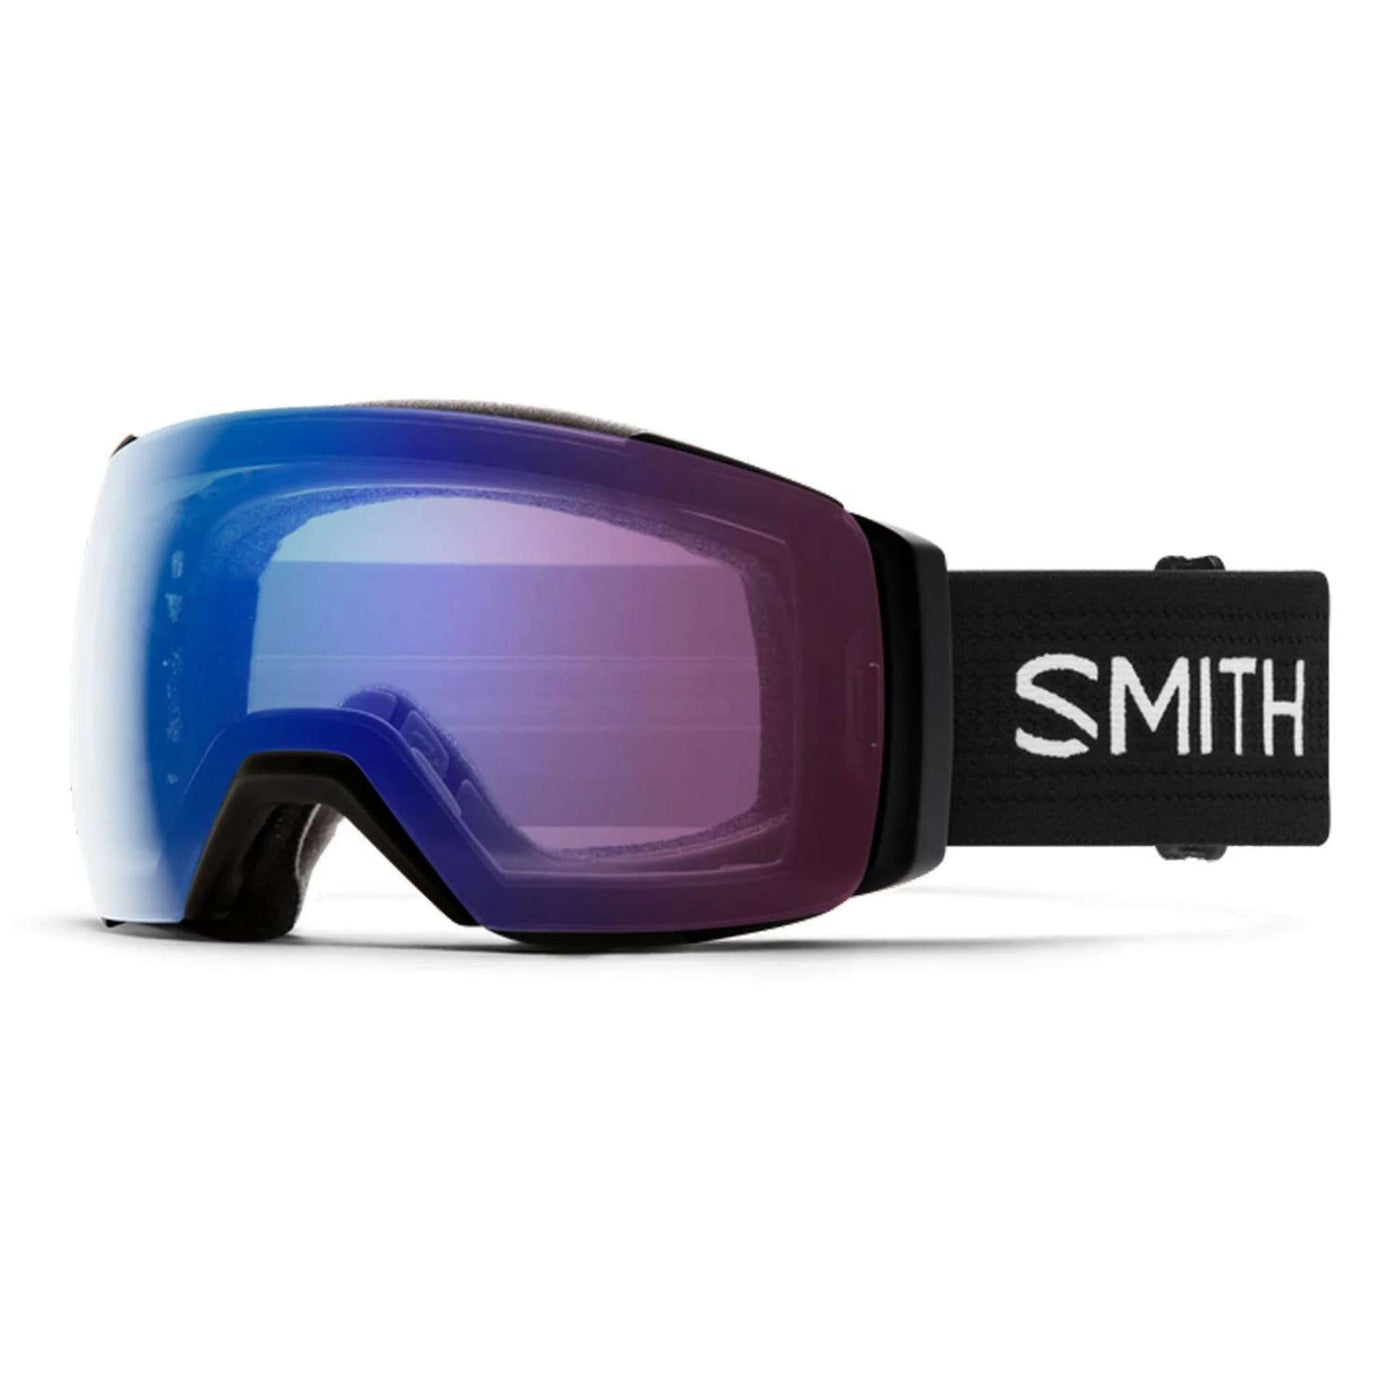 Smith  I/O MAG XL   ChromaPop  Goggles - Photochromic Rose Flash / ChromaPop Storm Yellow Flash  Lens | Performance Sunglasses | Further Faster Christchurch NZ